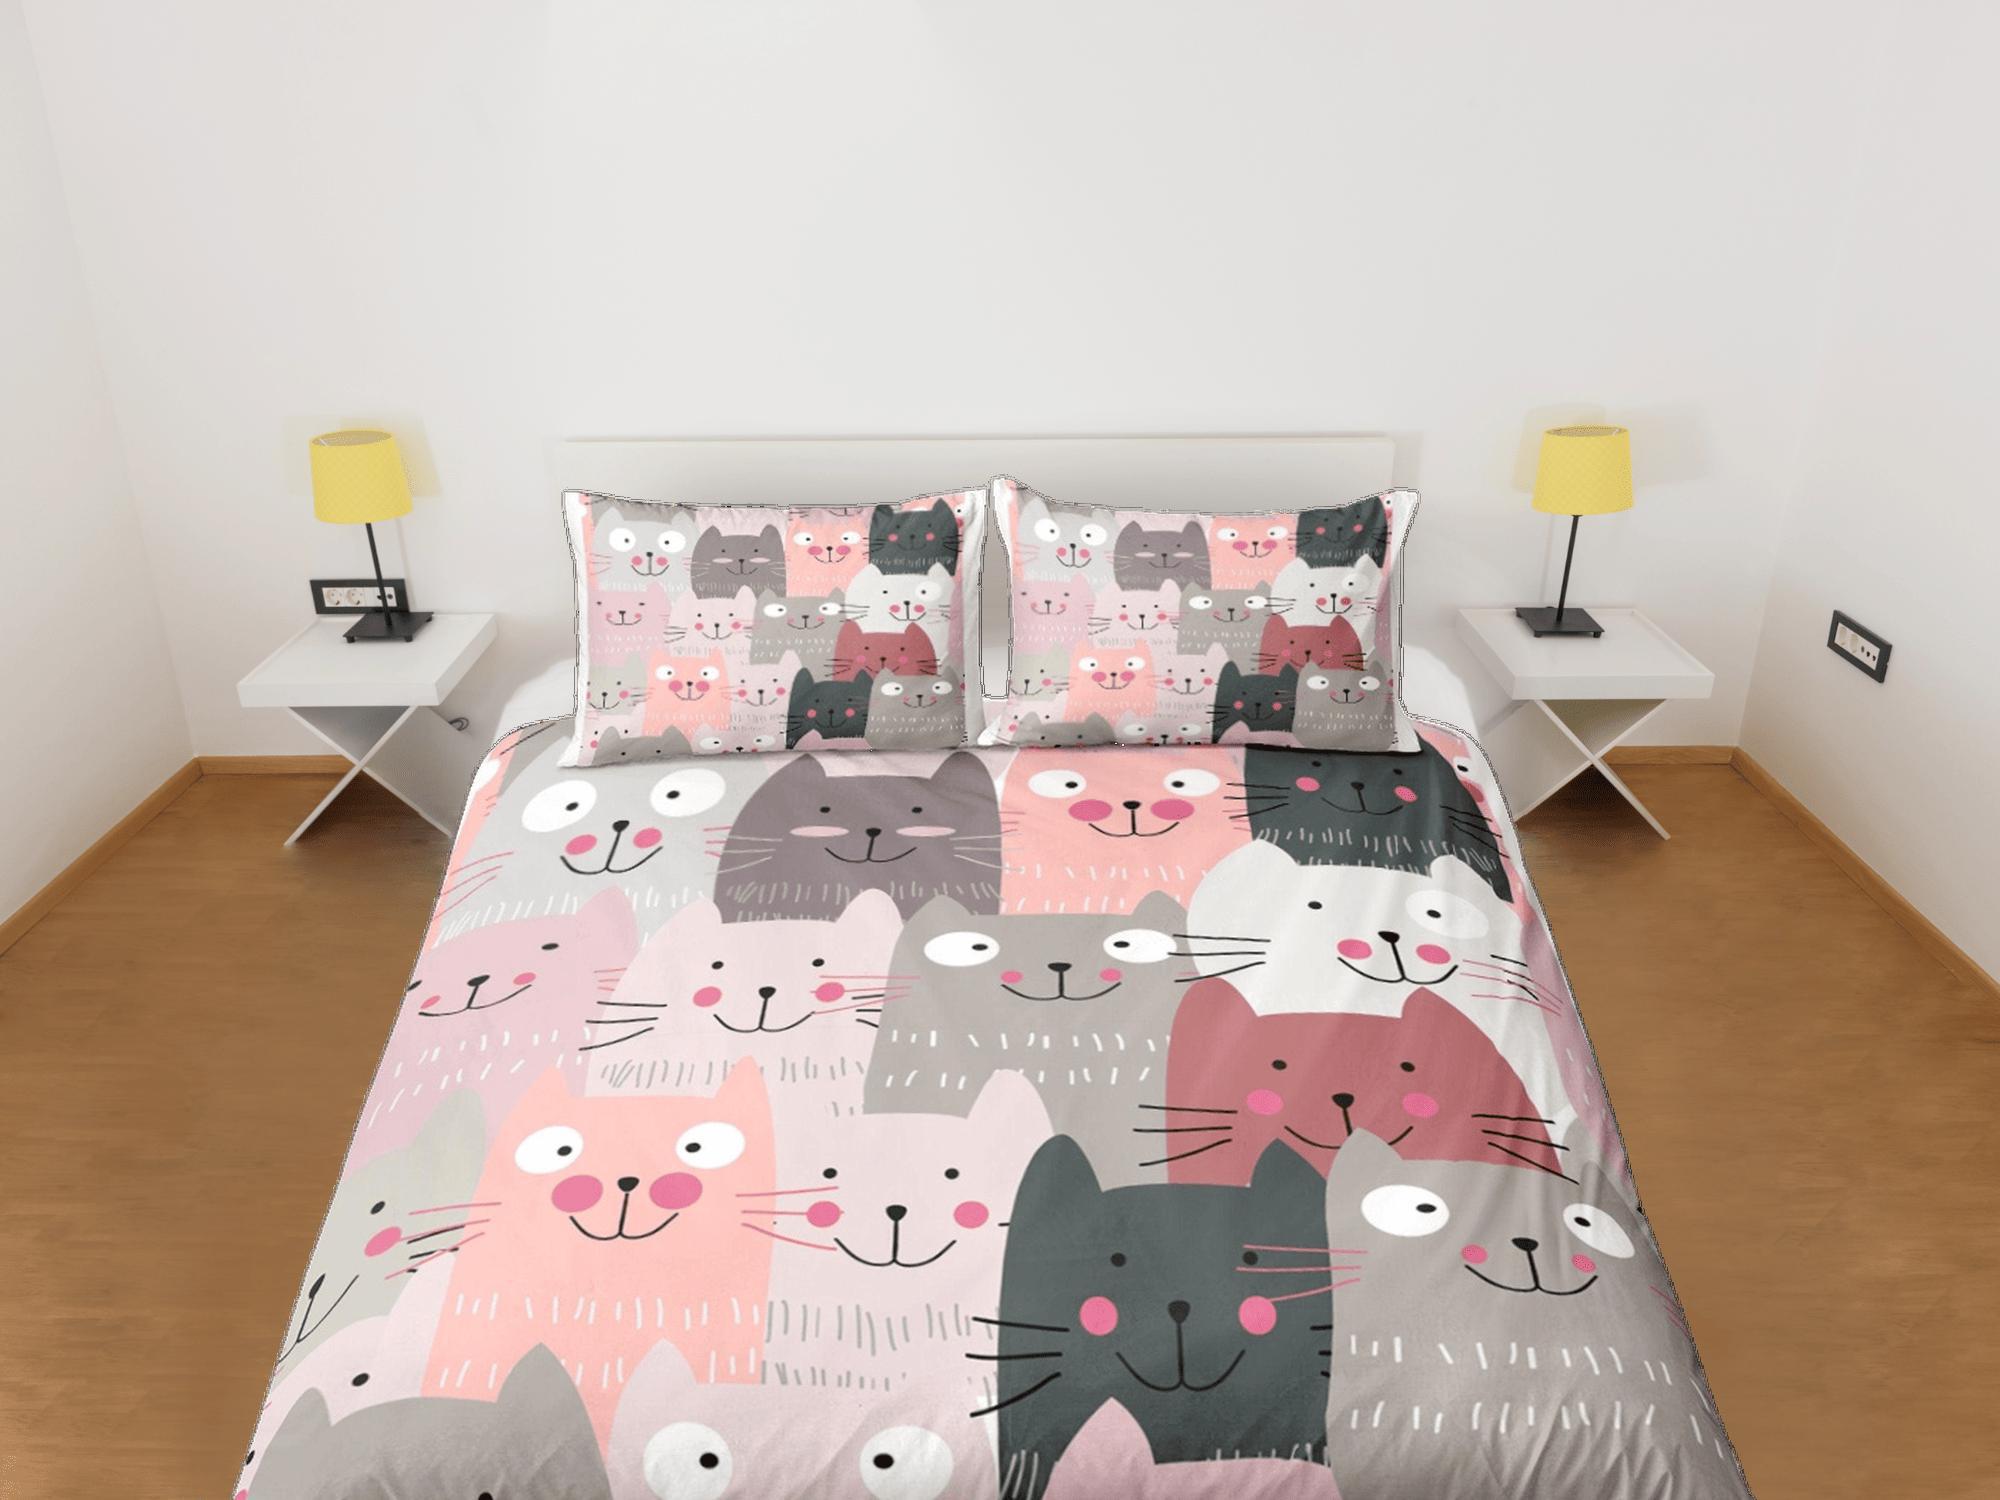 daintyduvet Cat Lover Duvet Cover Set Bedspread, Cute Cats Bedding for Teens Kids Bedroom